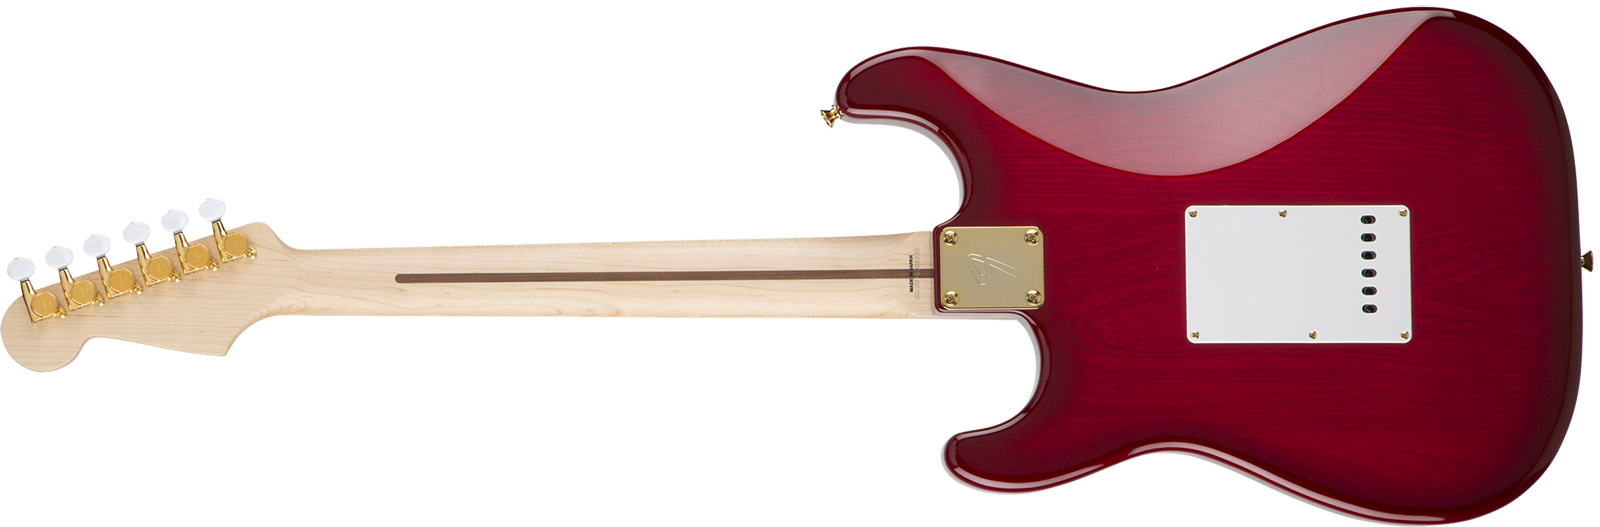 Fender Richie Kotzen Strat Japan Ltd 3s Mn - Transparent Red Burst - Str shape electric guitar - Variation 4